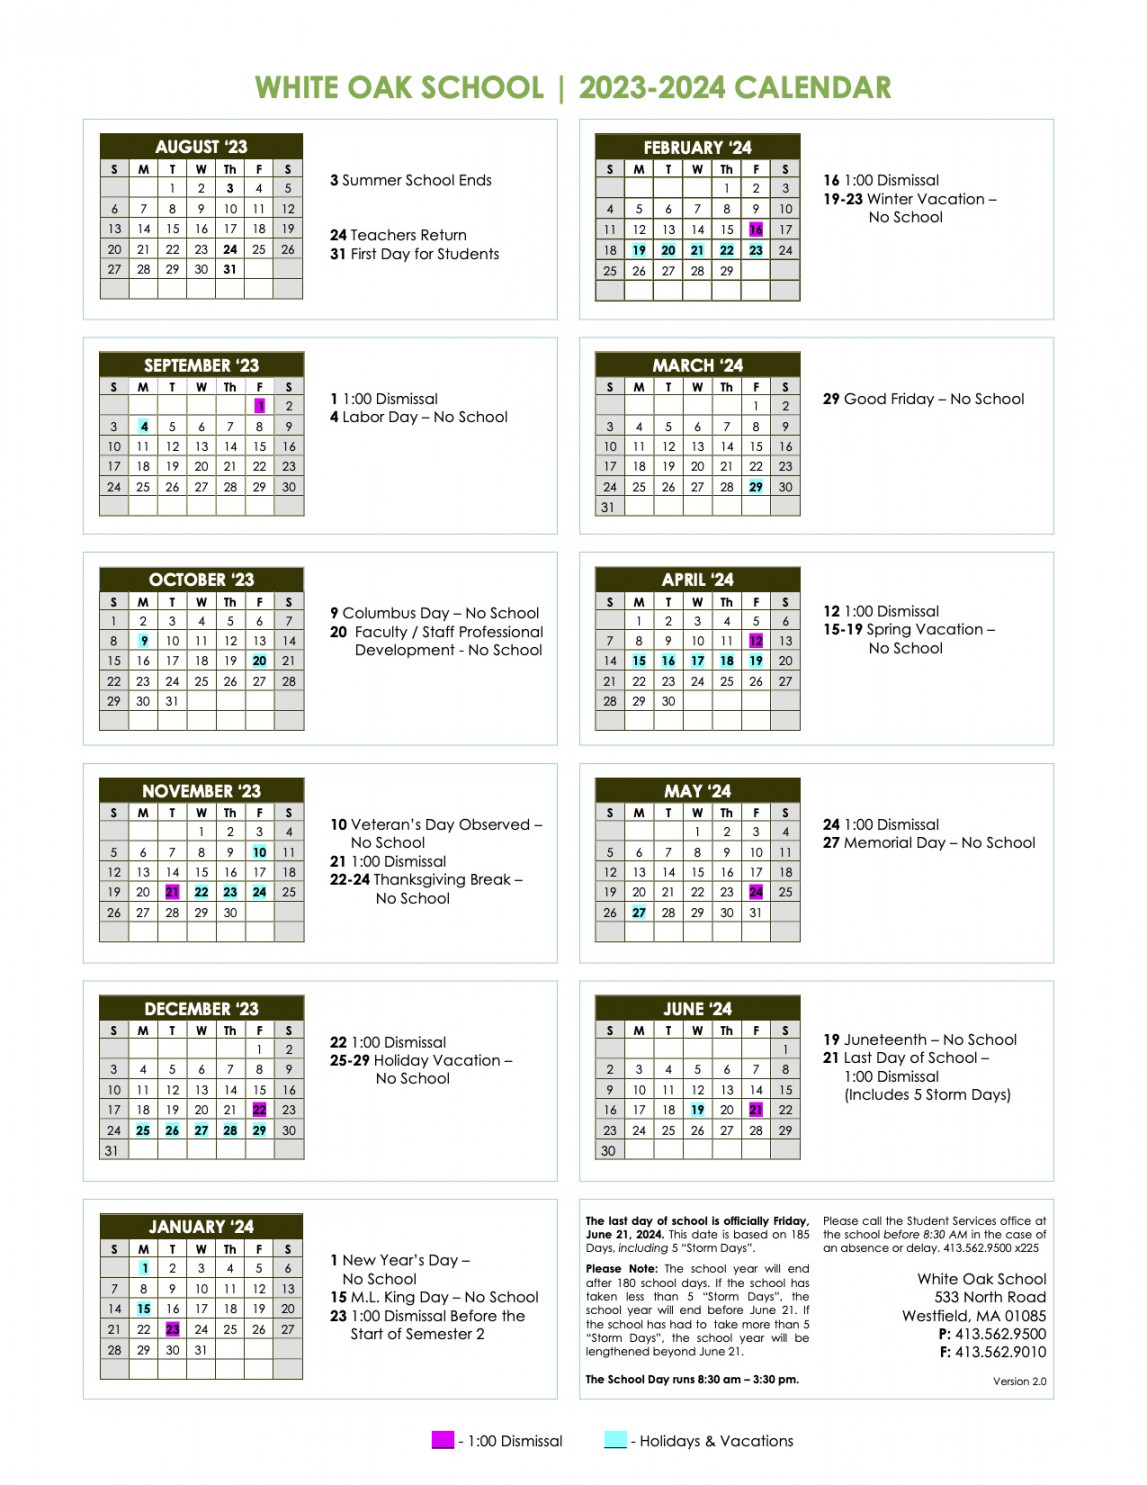 School Calendar - – White Oak School